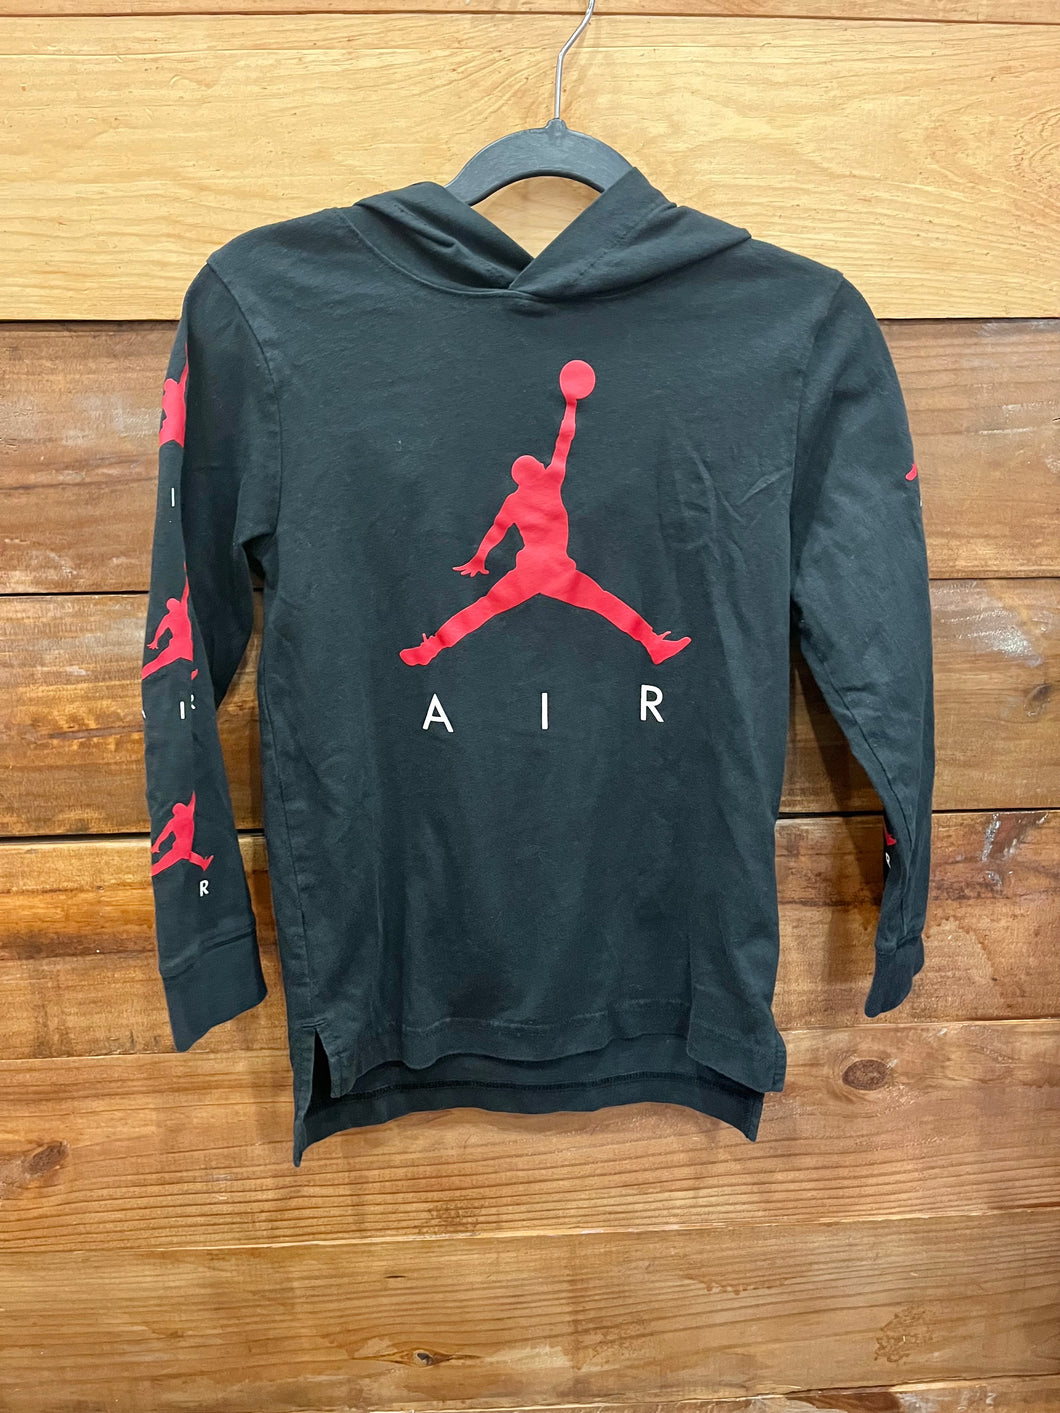 Air Jordan Black Shirt Size 6